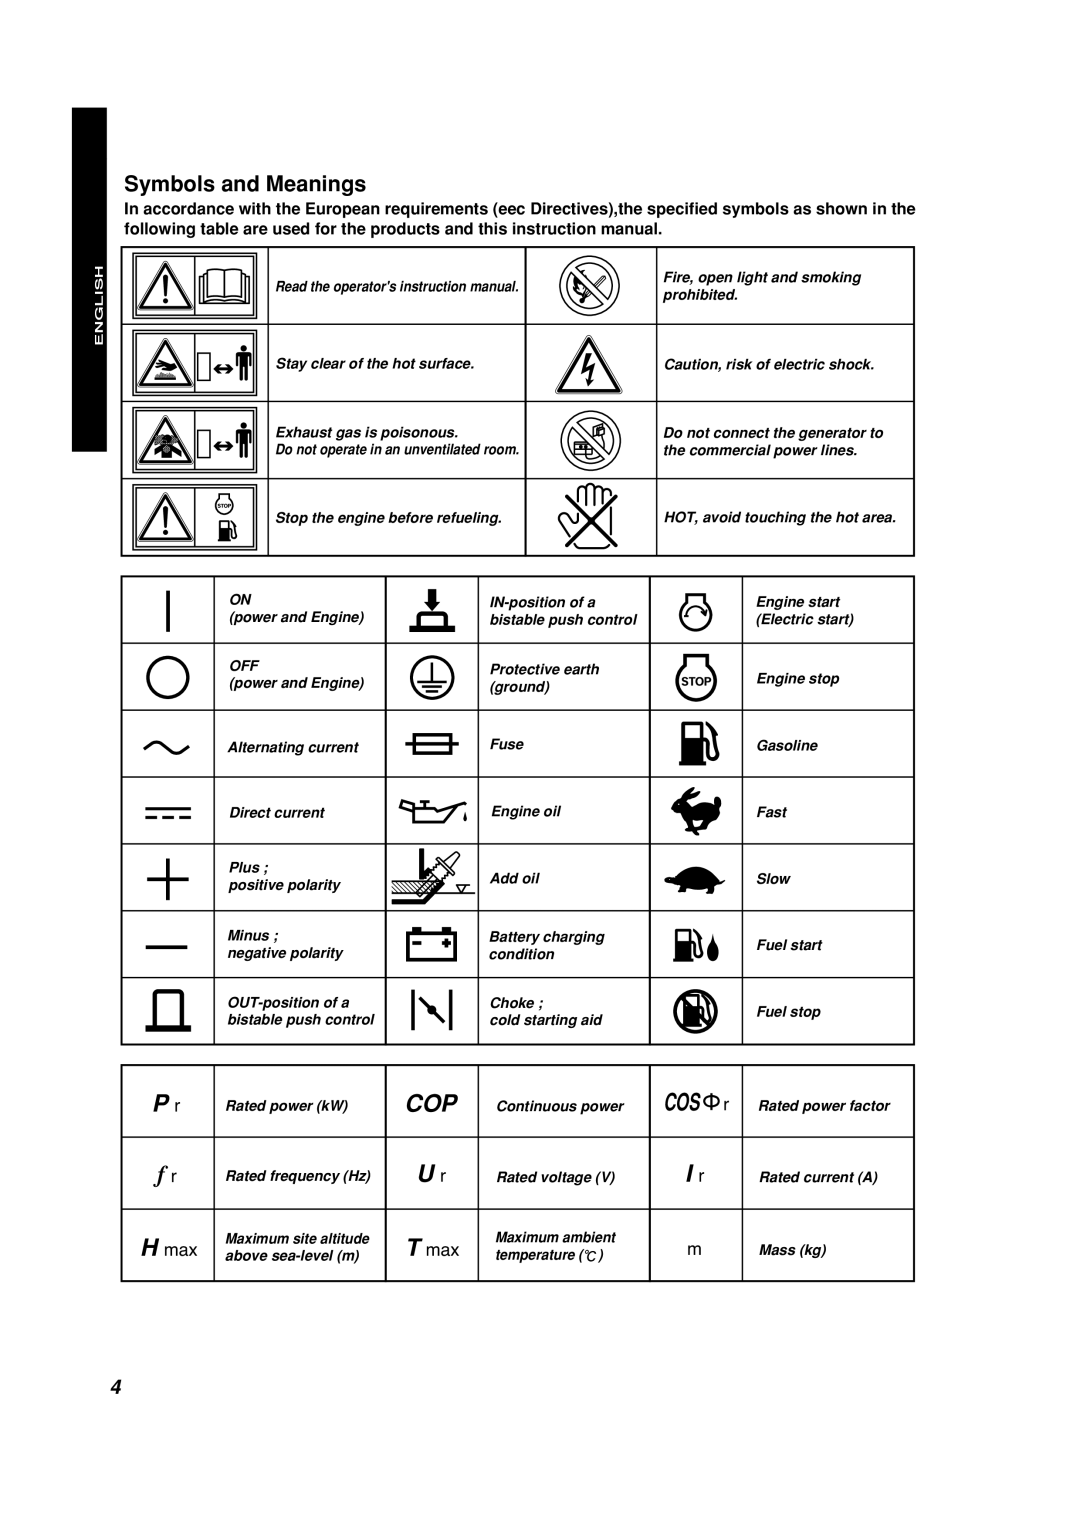 Makita G1700i manual Symbols and Meanings, COS r, English Française Español, H max, T max 